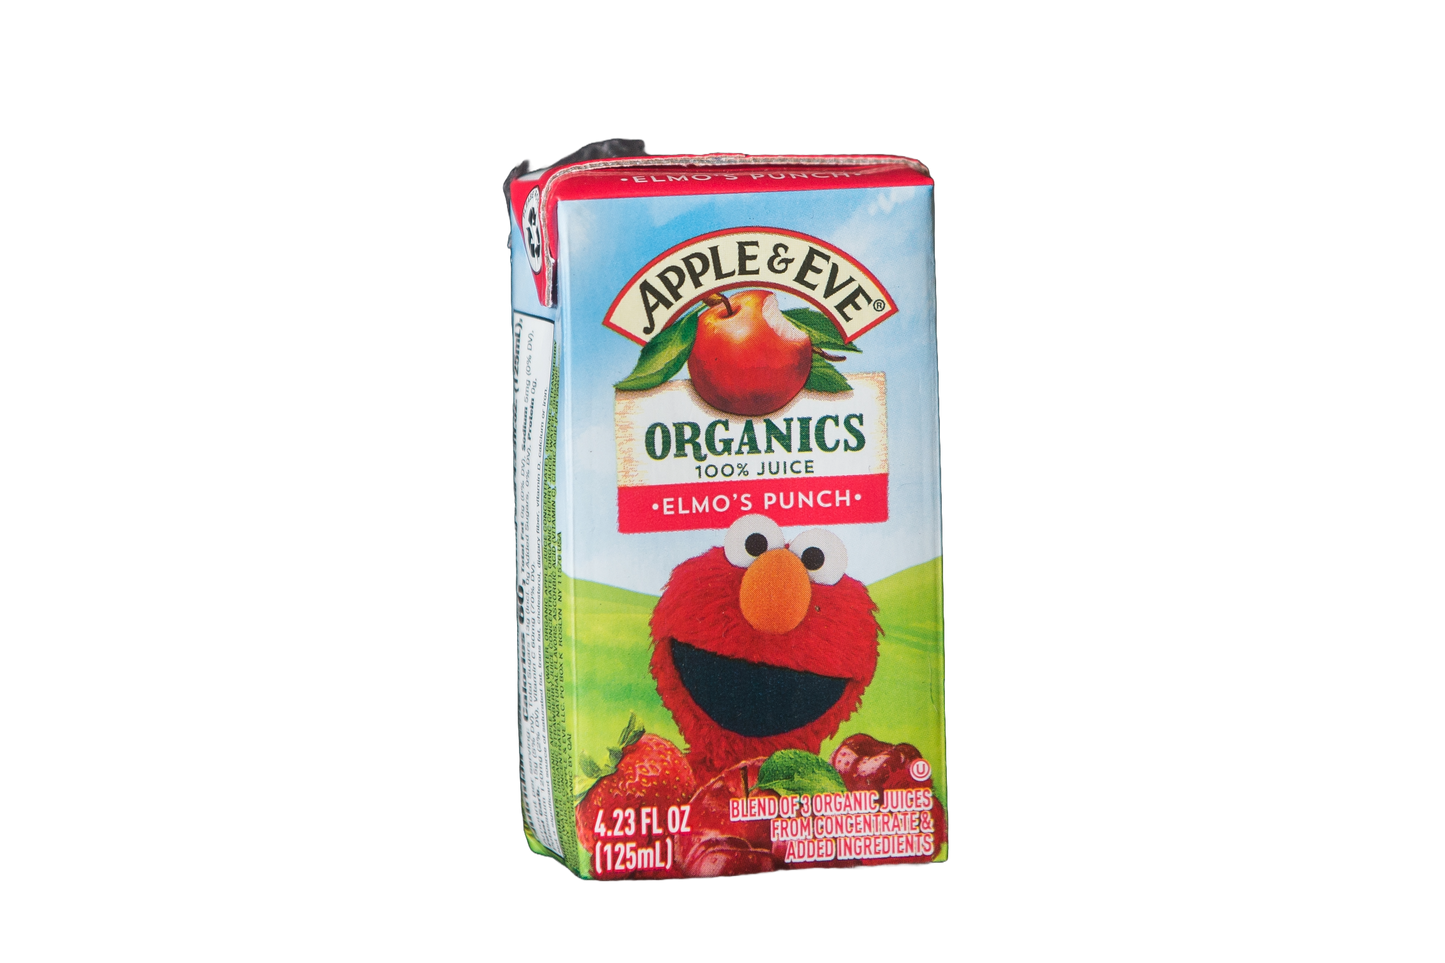 Apple & Eve Organics Elmo's Punch, 4.23 fl oz, 8 count